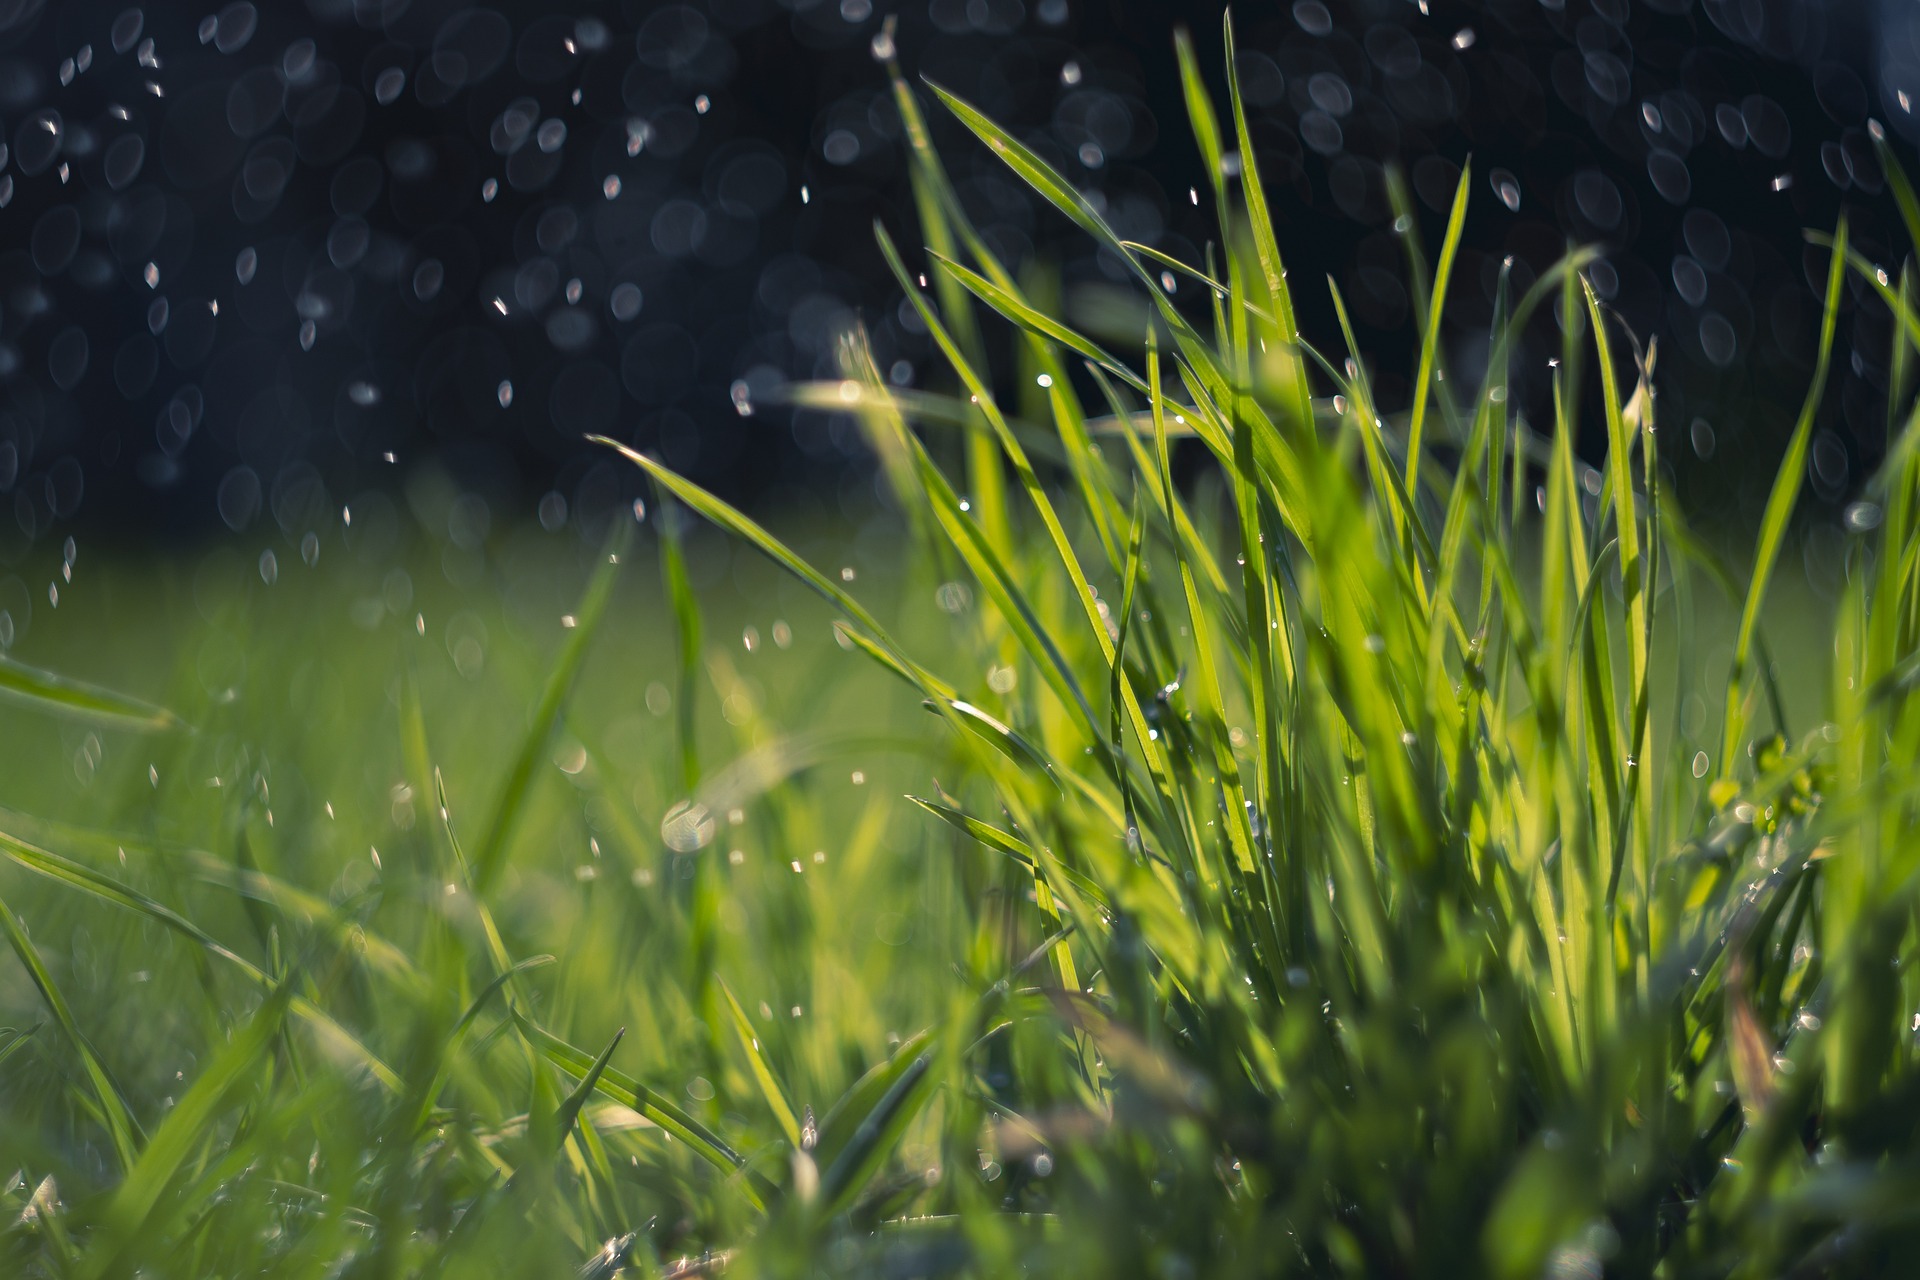 Rain falling on grass